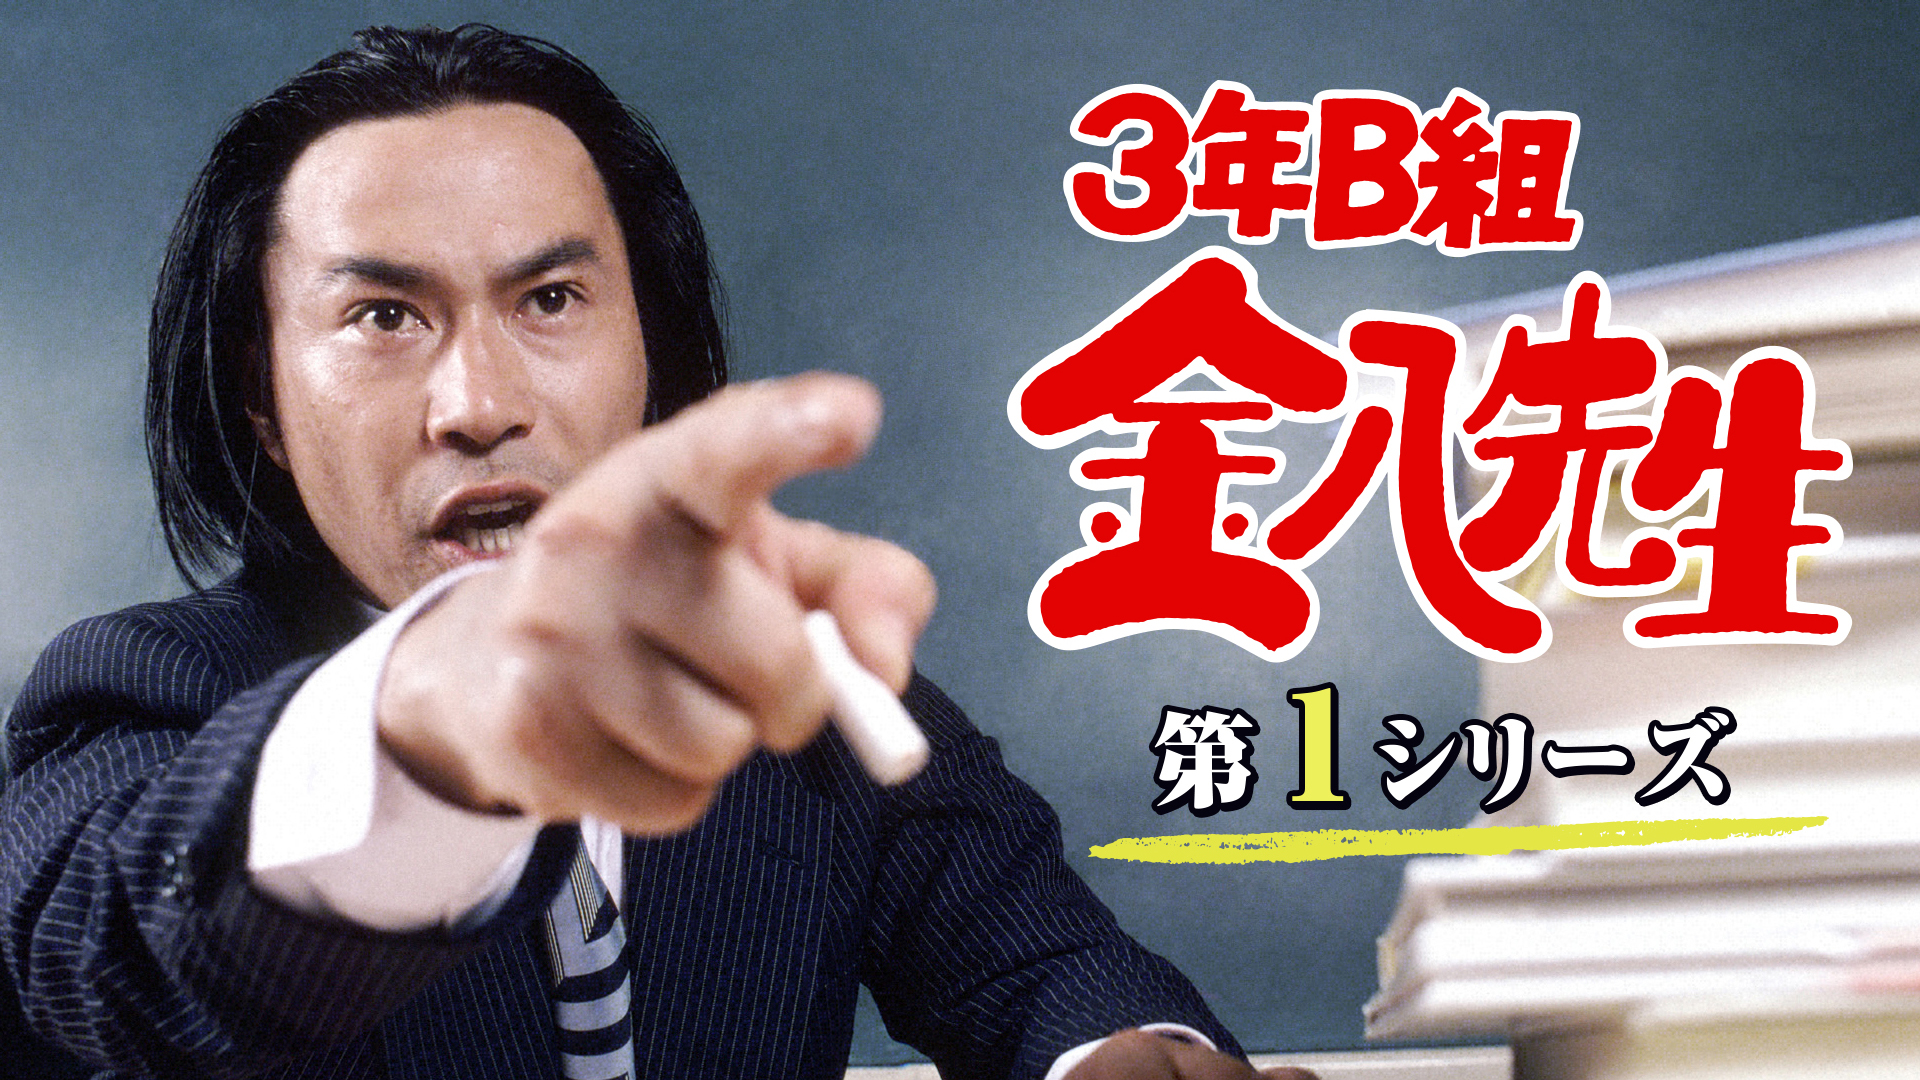 3年B組金八先生(第1シリーズ)(国内ドラマ / 1979) - 動画配信 | U-NEXT 